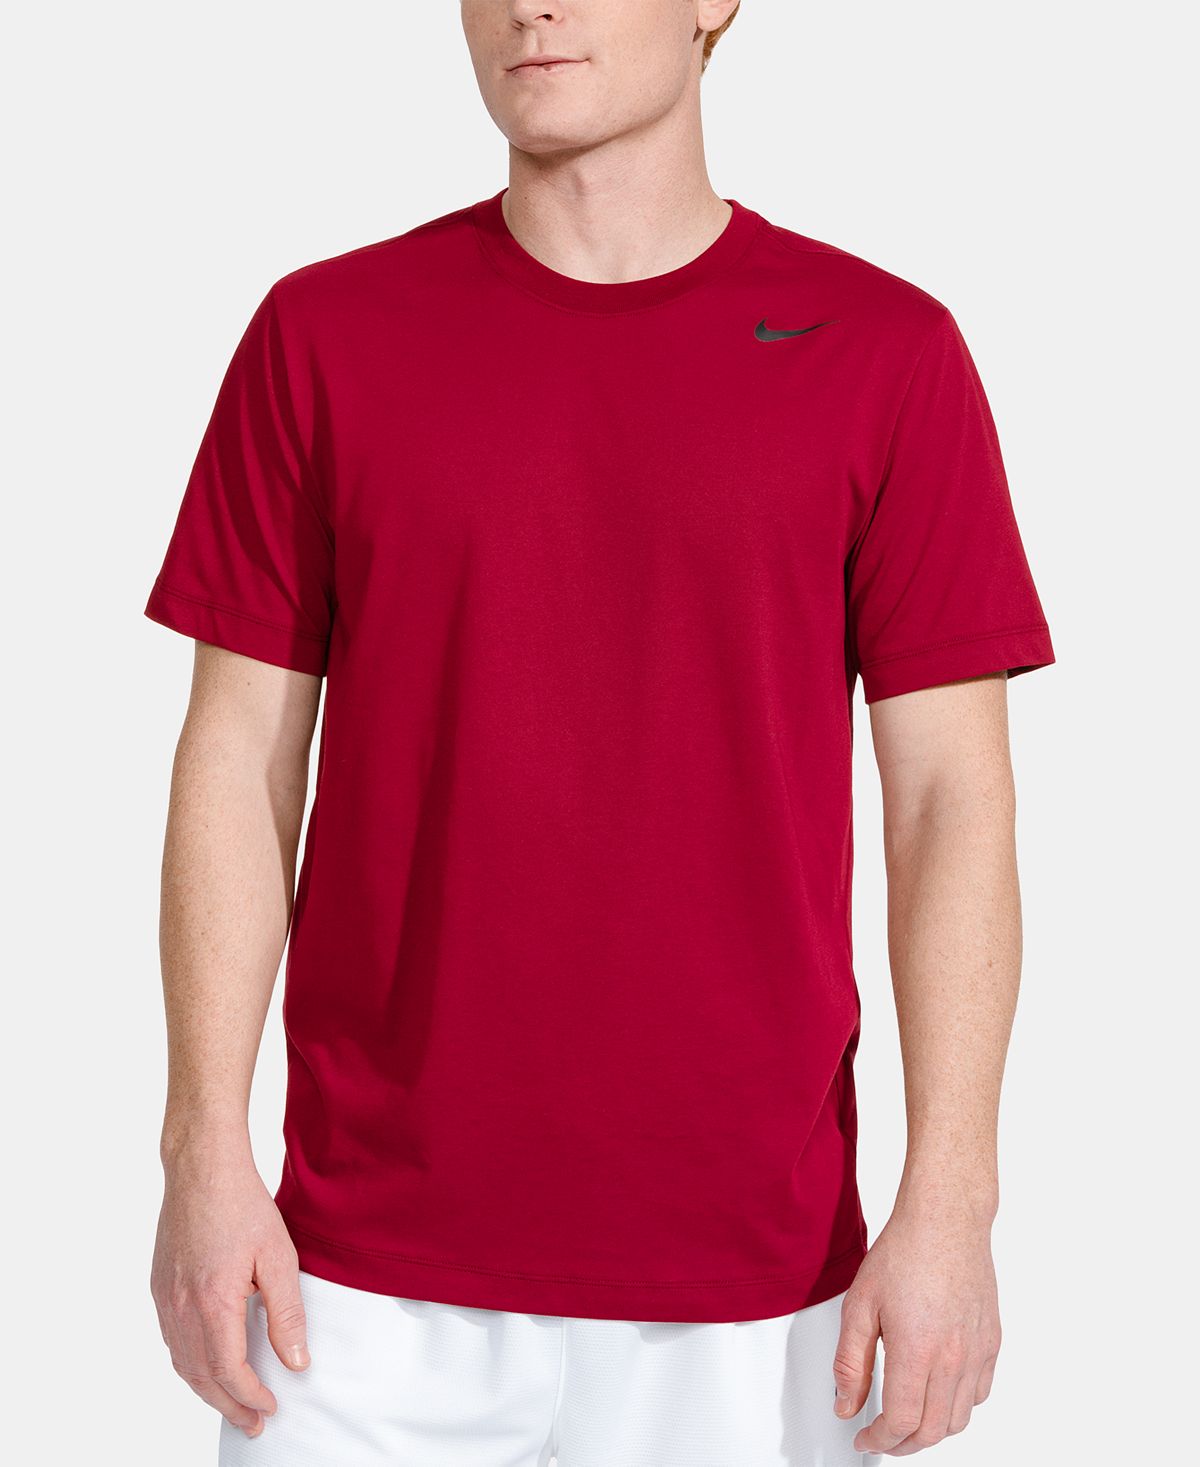 Nike Dri-fit Training T-shirt Red/Red